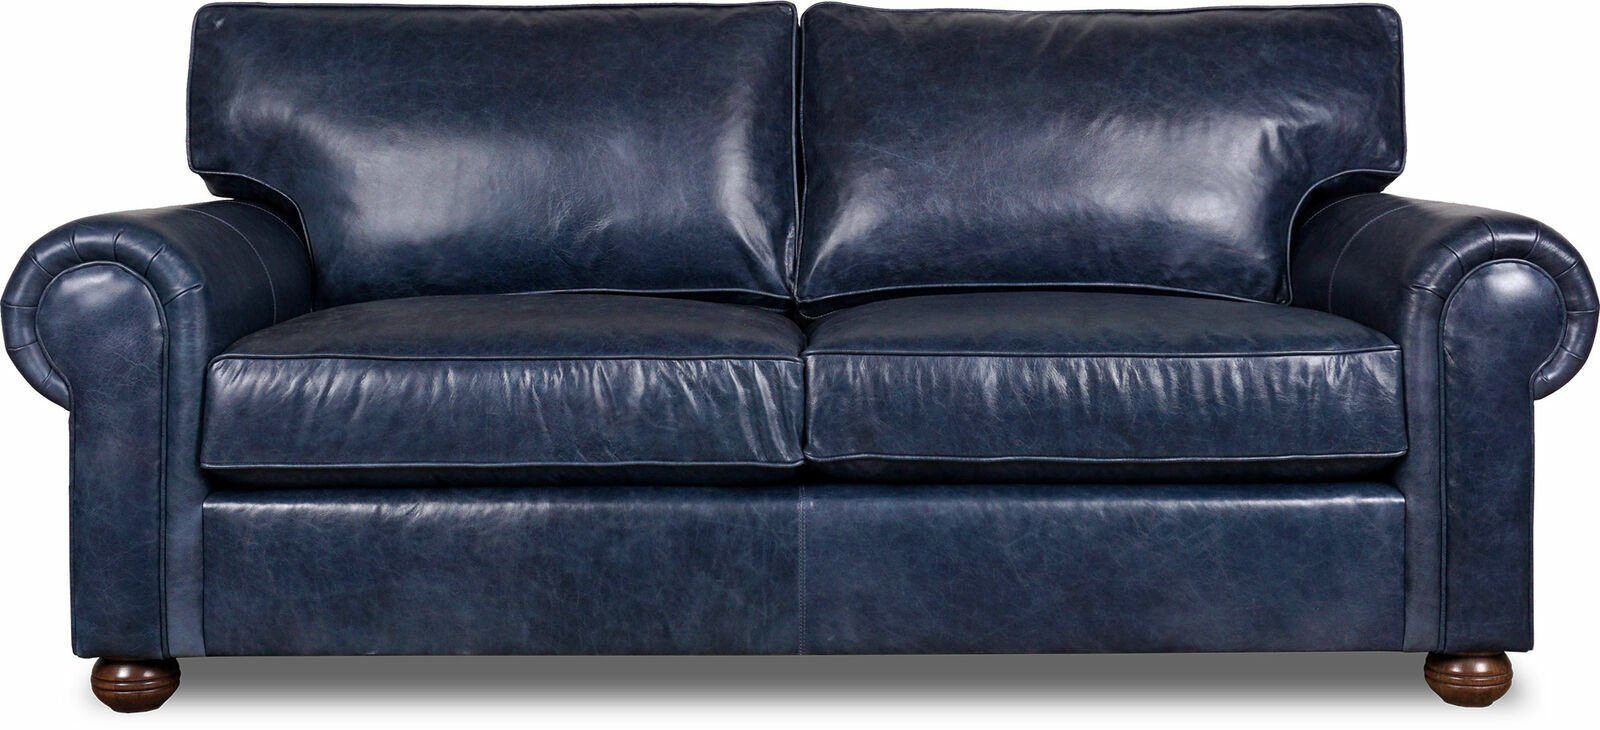 JVmoebel 3-Sitzer Sofa Couch Polster 3-Sitzer Eck Sofas Kunstleder Garnitur Neu, Made in Europe